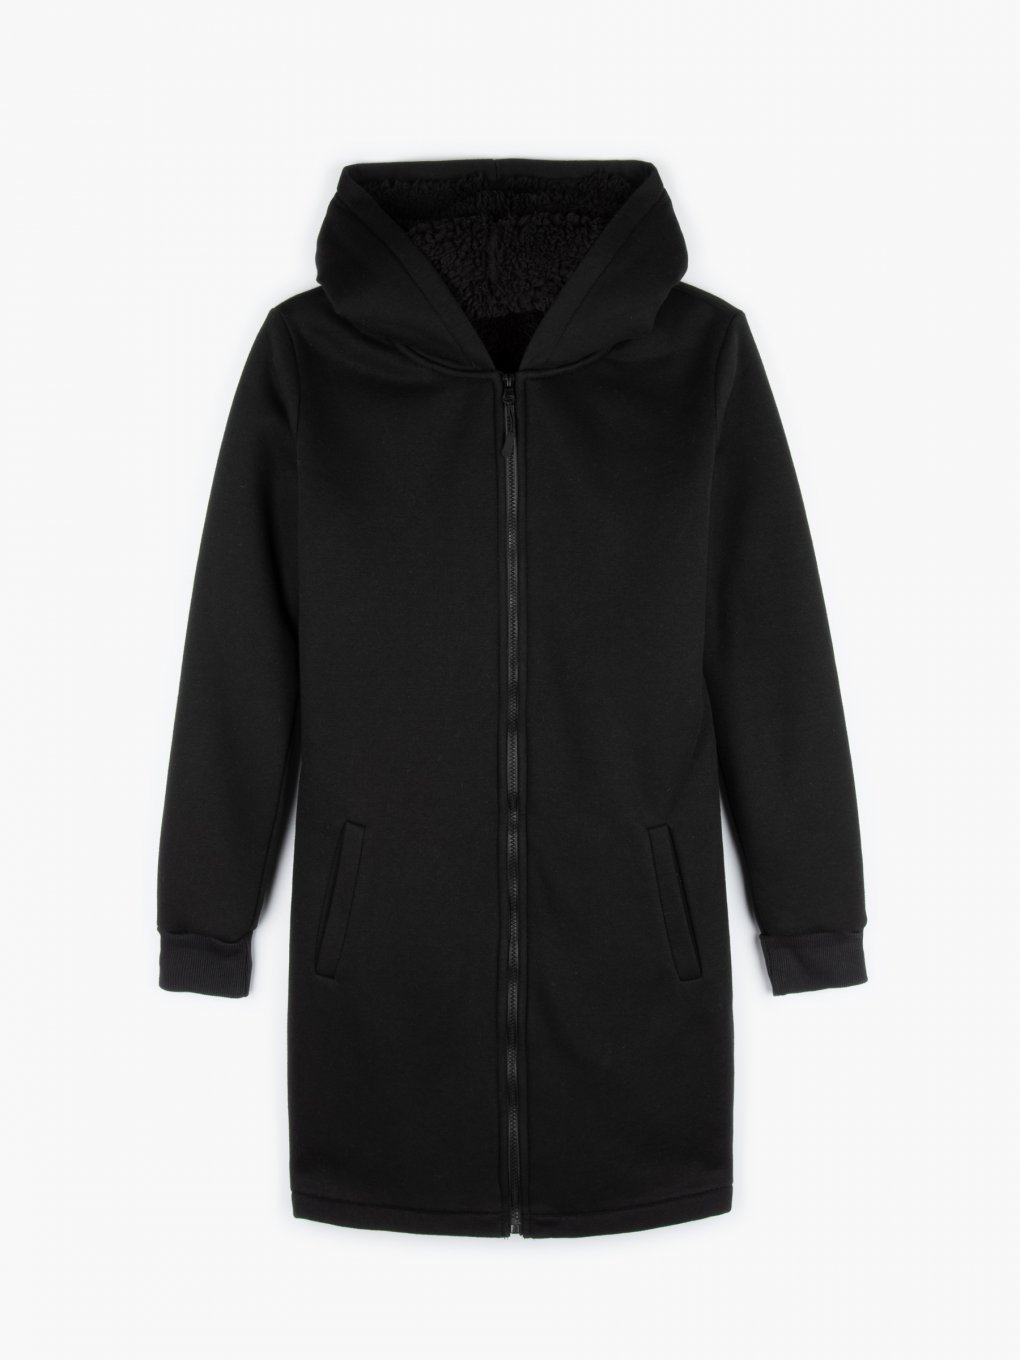 Longline zip-up hooded sweatshirt